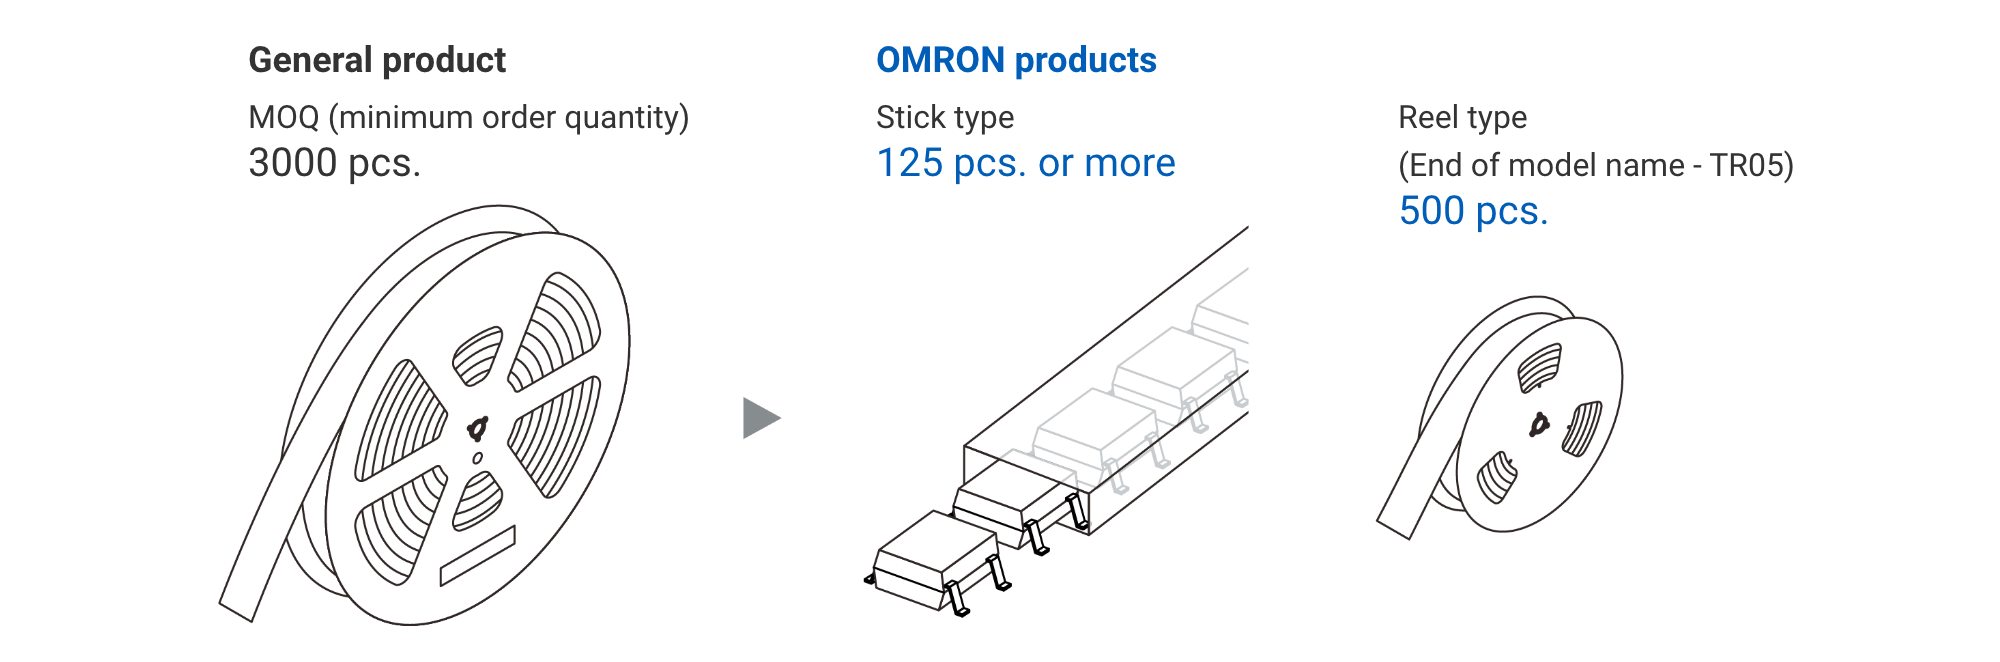 General product：MOQ (minimum order quantity) 3000pcs => OMRON products：Stick type 125 pcs. or more, Reel type (End of model name - TR05) 500 pcs.